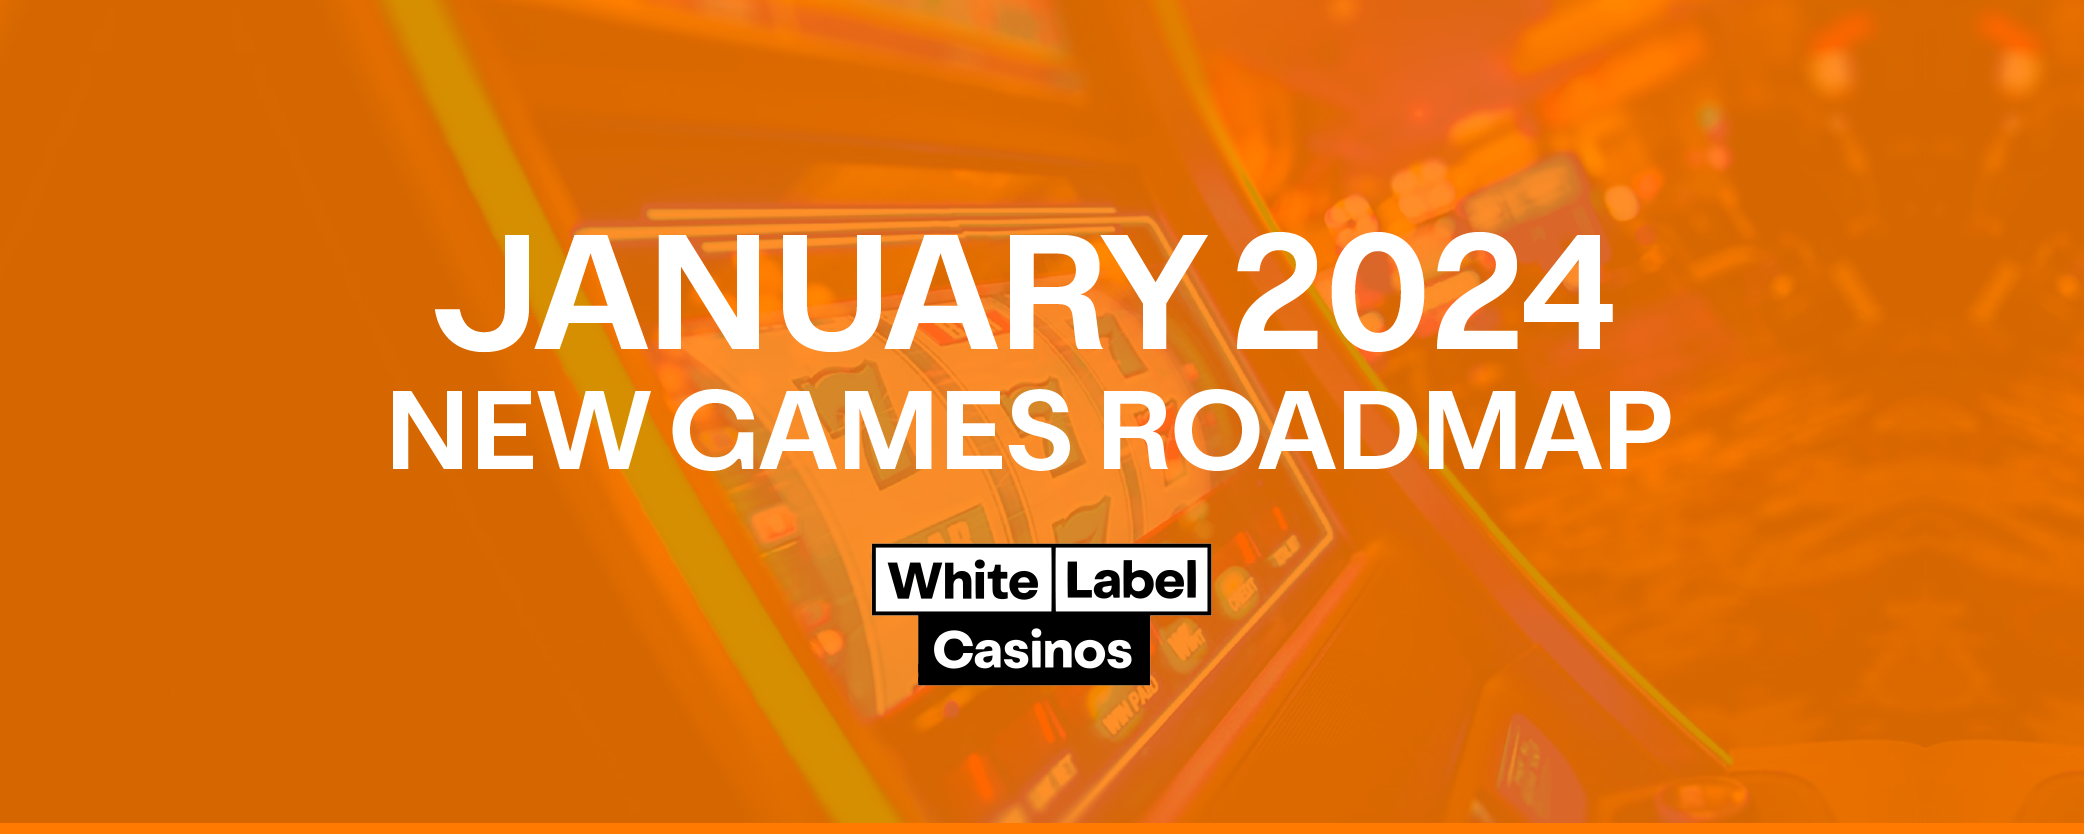 january 2024 new games roadmap